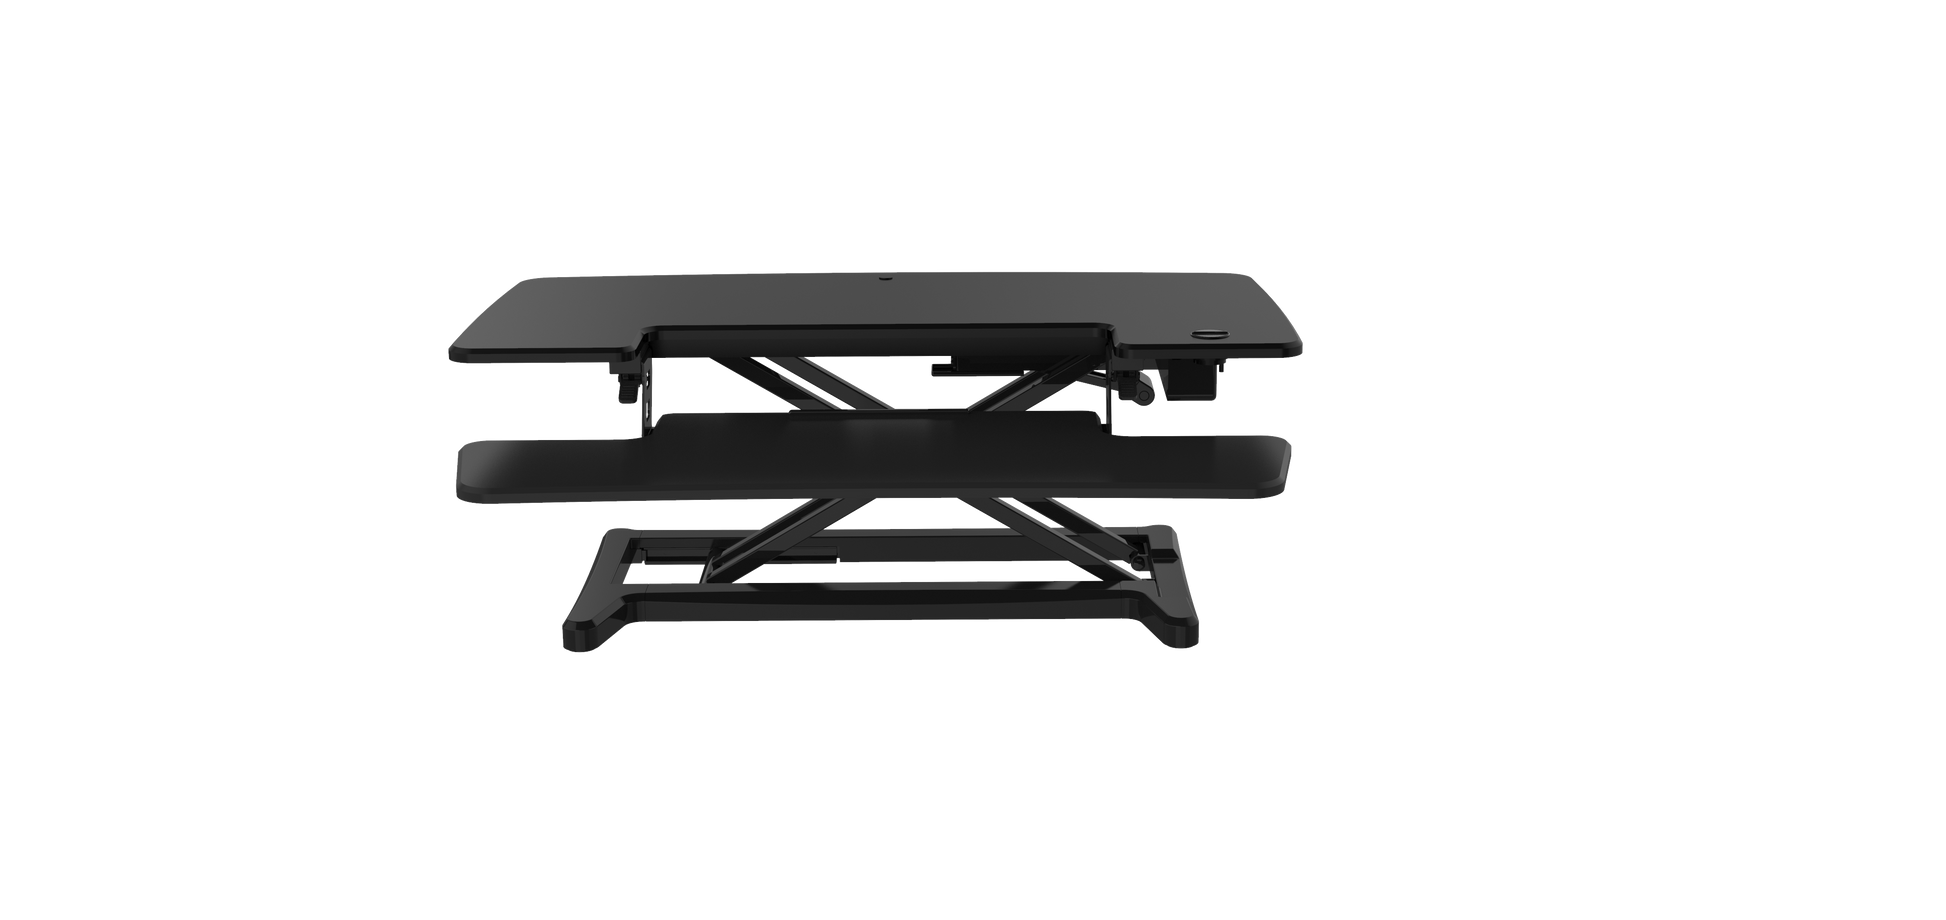 Buy Rapidline Rapid Flux Electric Desk Riser - Small or Medium RF1 RF2 with FREE SHIPPING desk converter, desk riser, height adjustable black